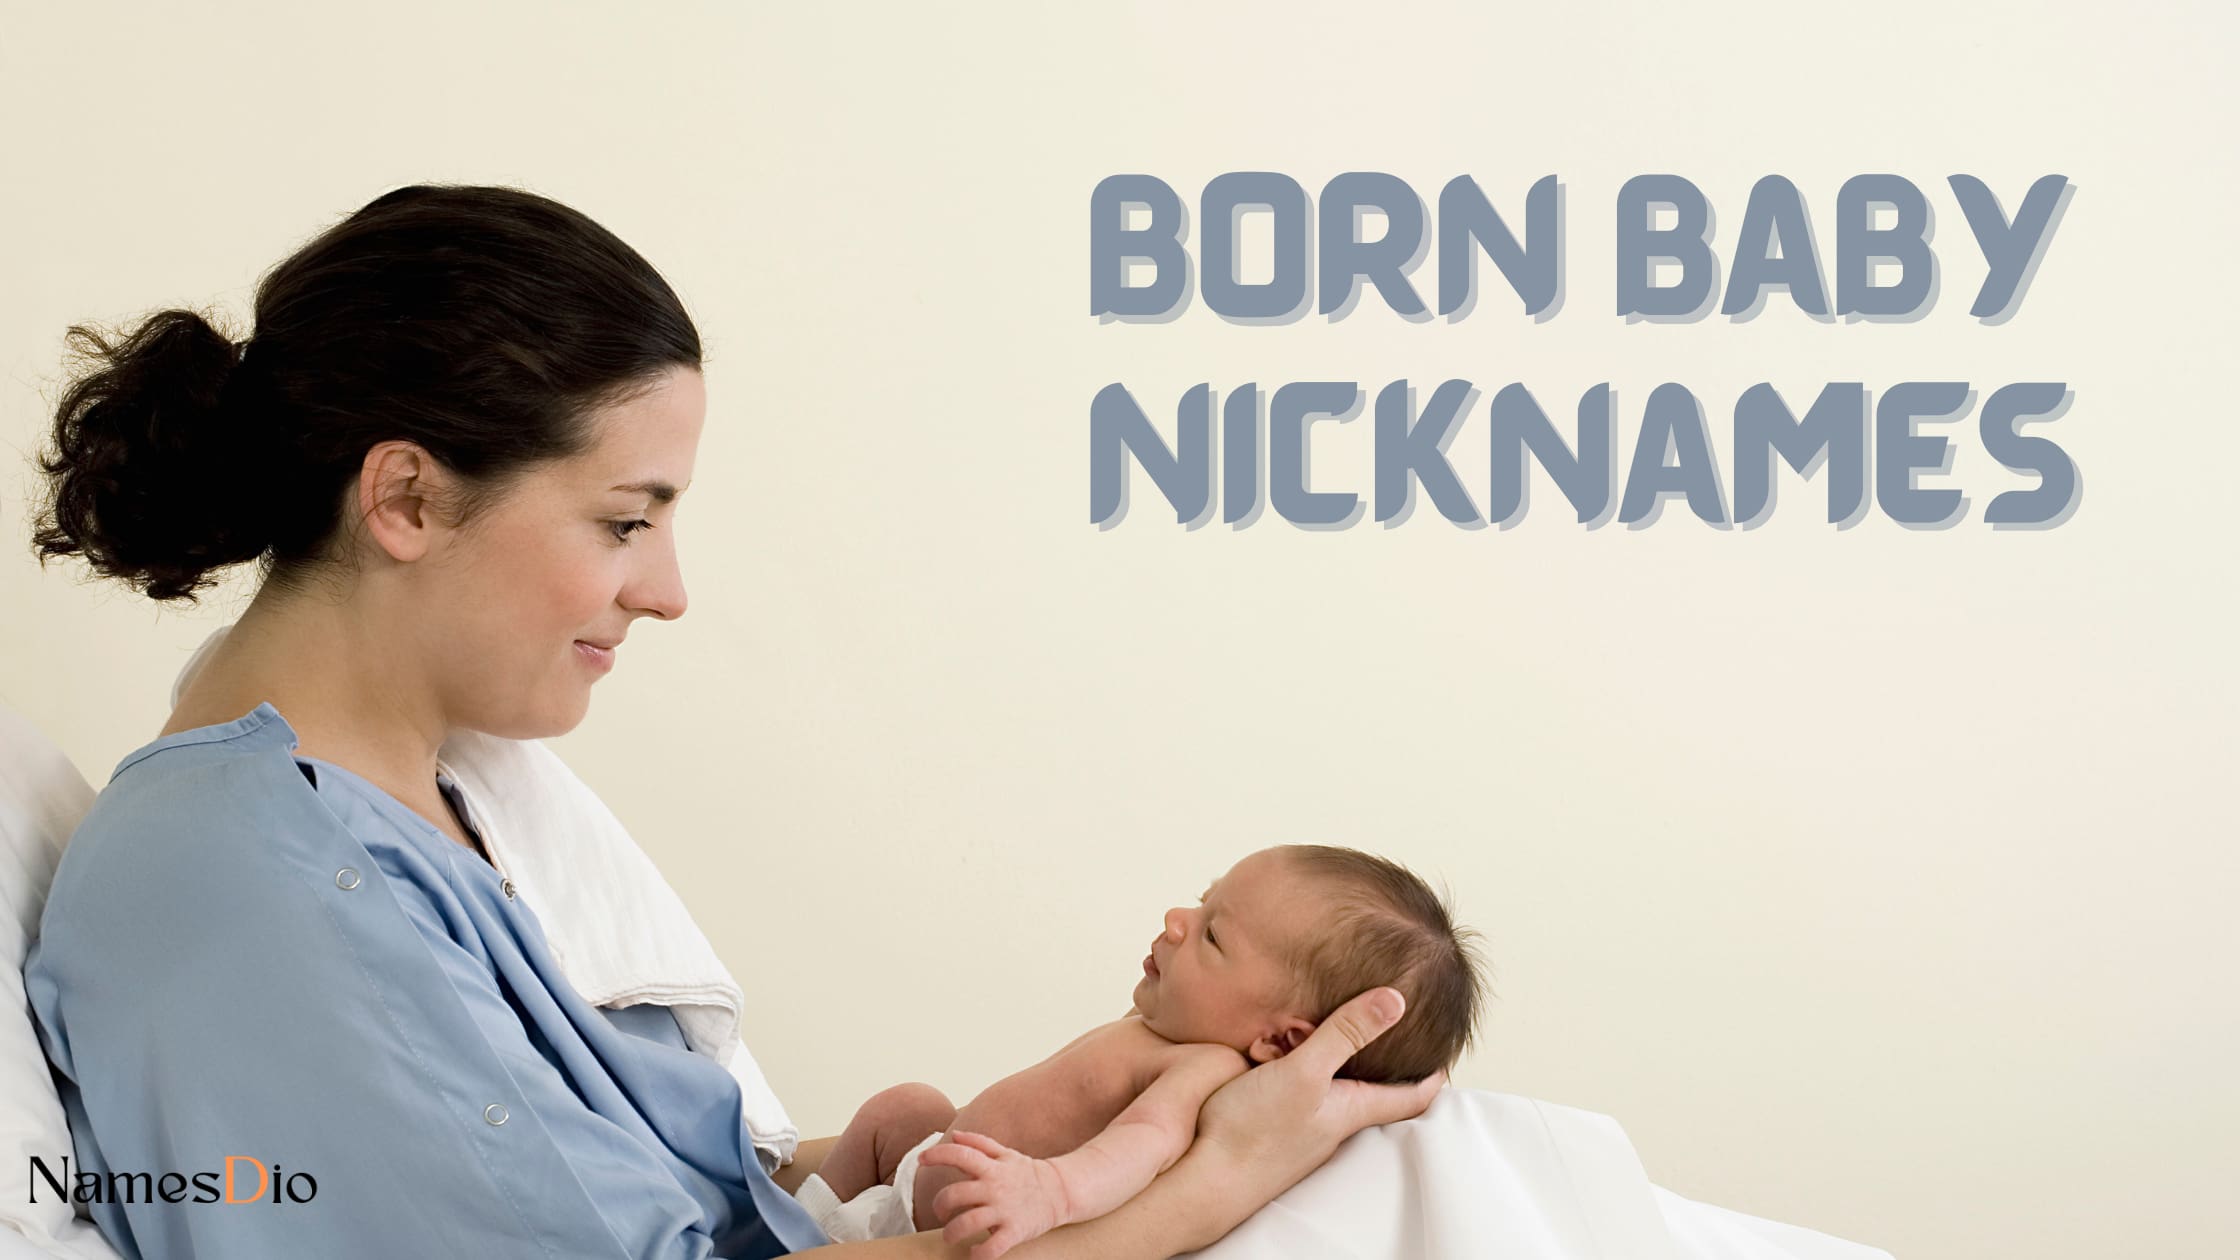 Born-Baby-Nicknames